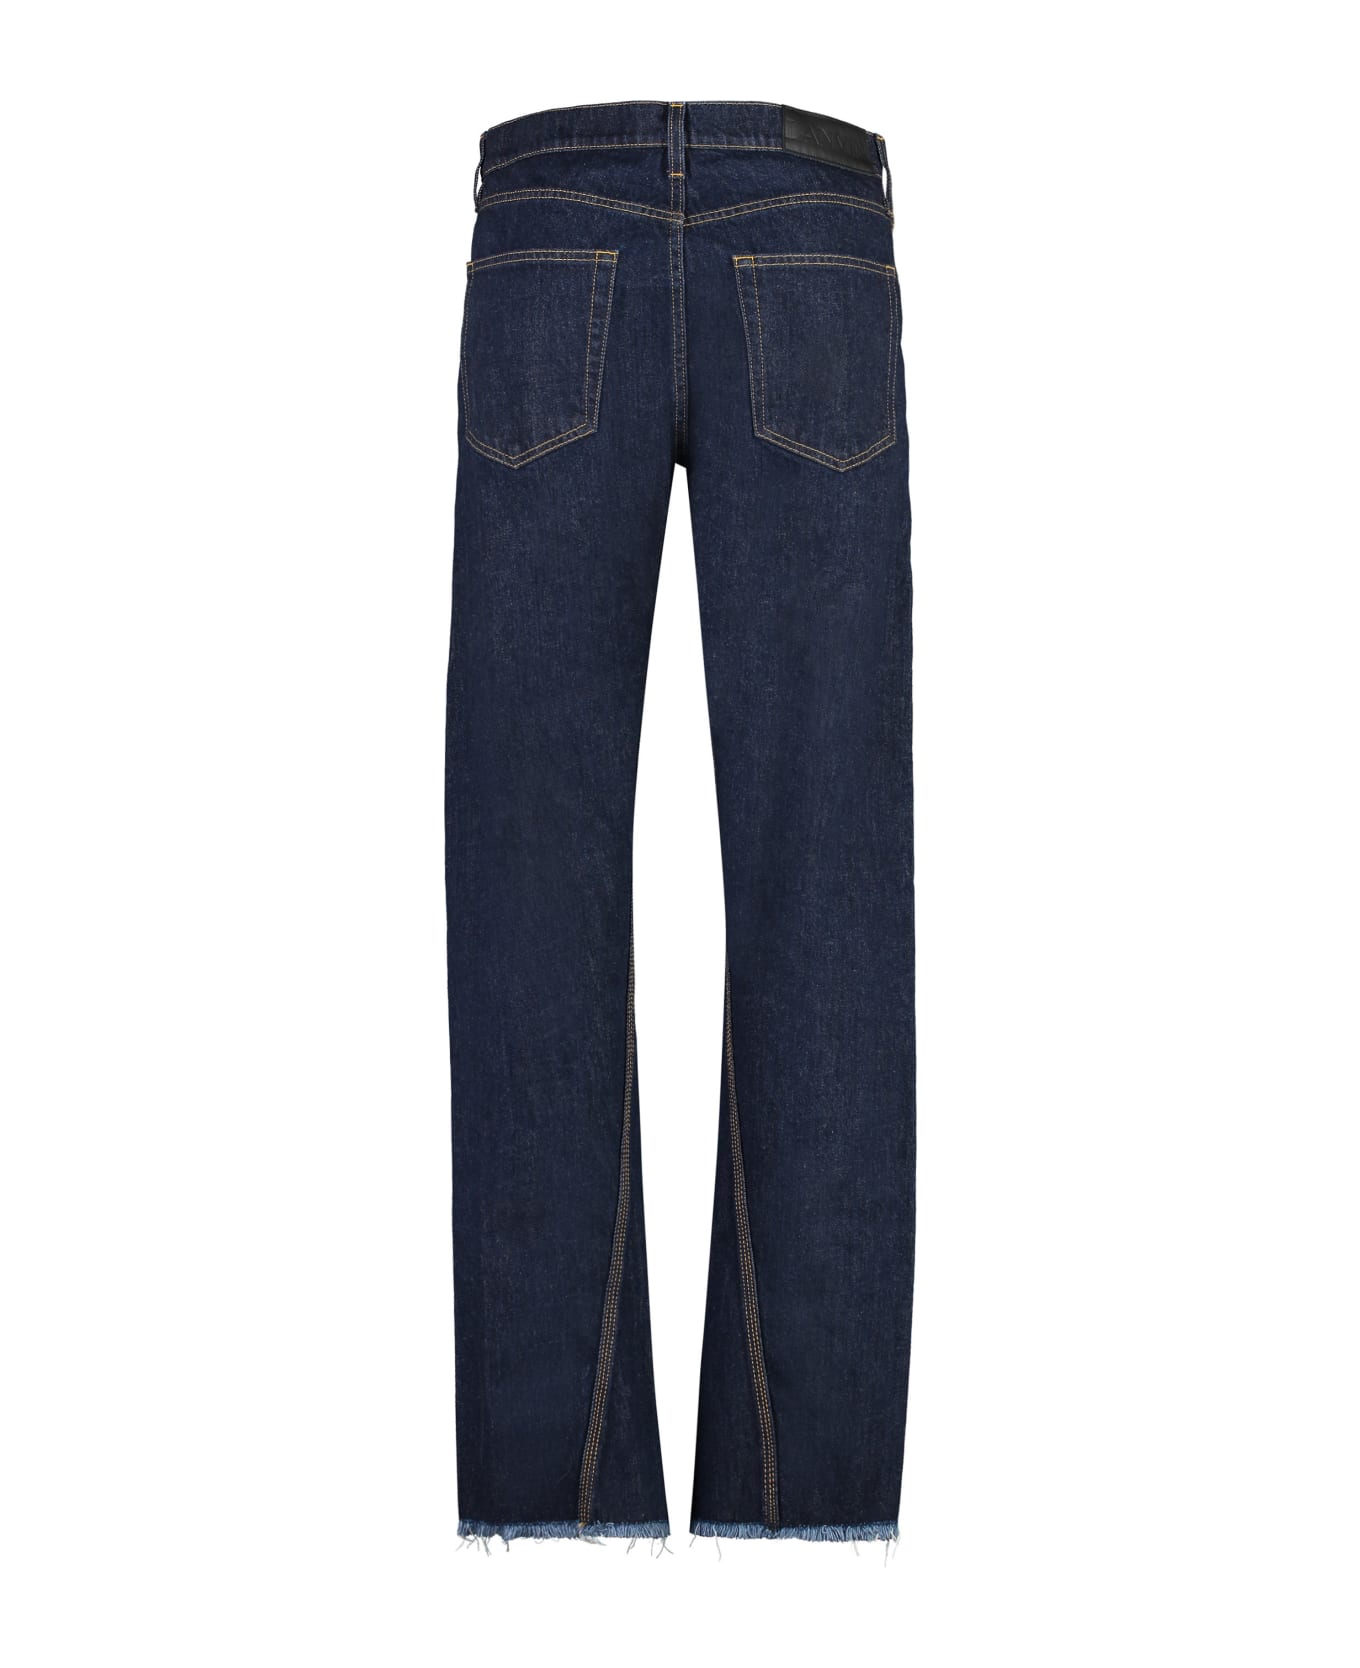 Lanvin 5-pocket Straight-leg Jeans - Navy Blue